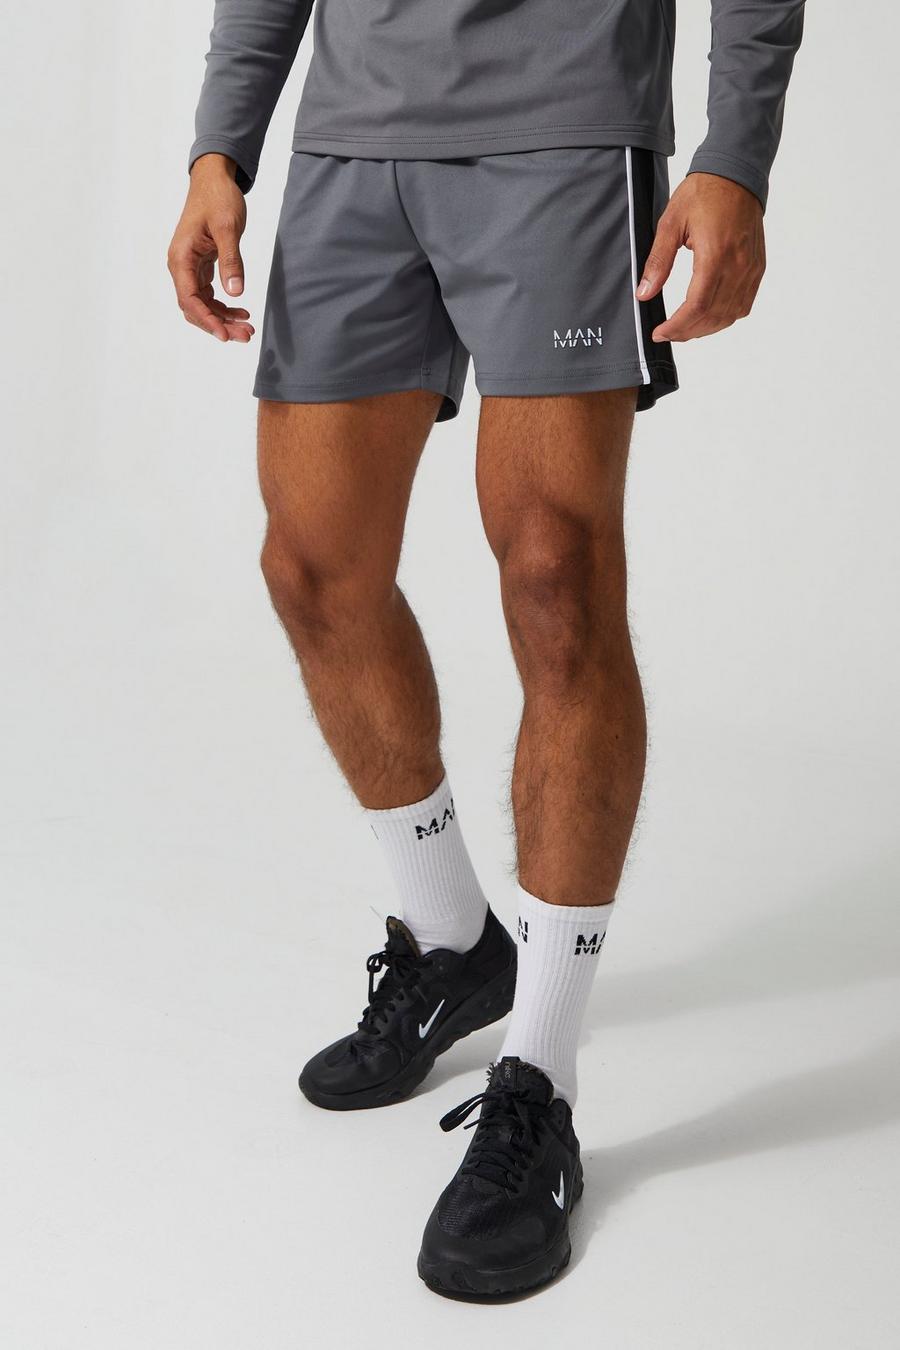 Charcoal grey Man Active Performance Training Shorts